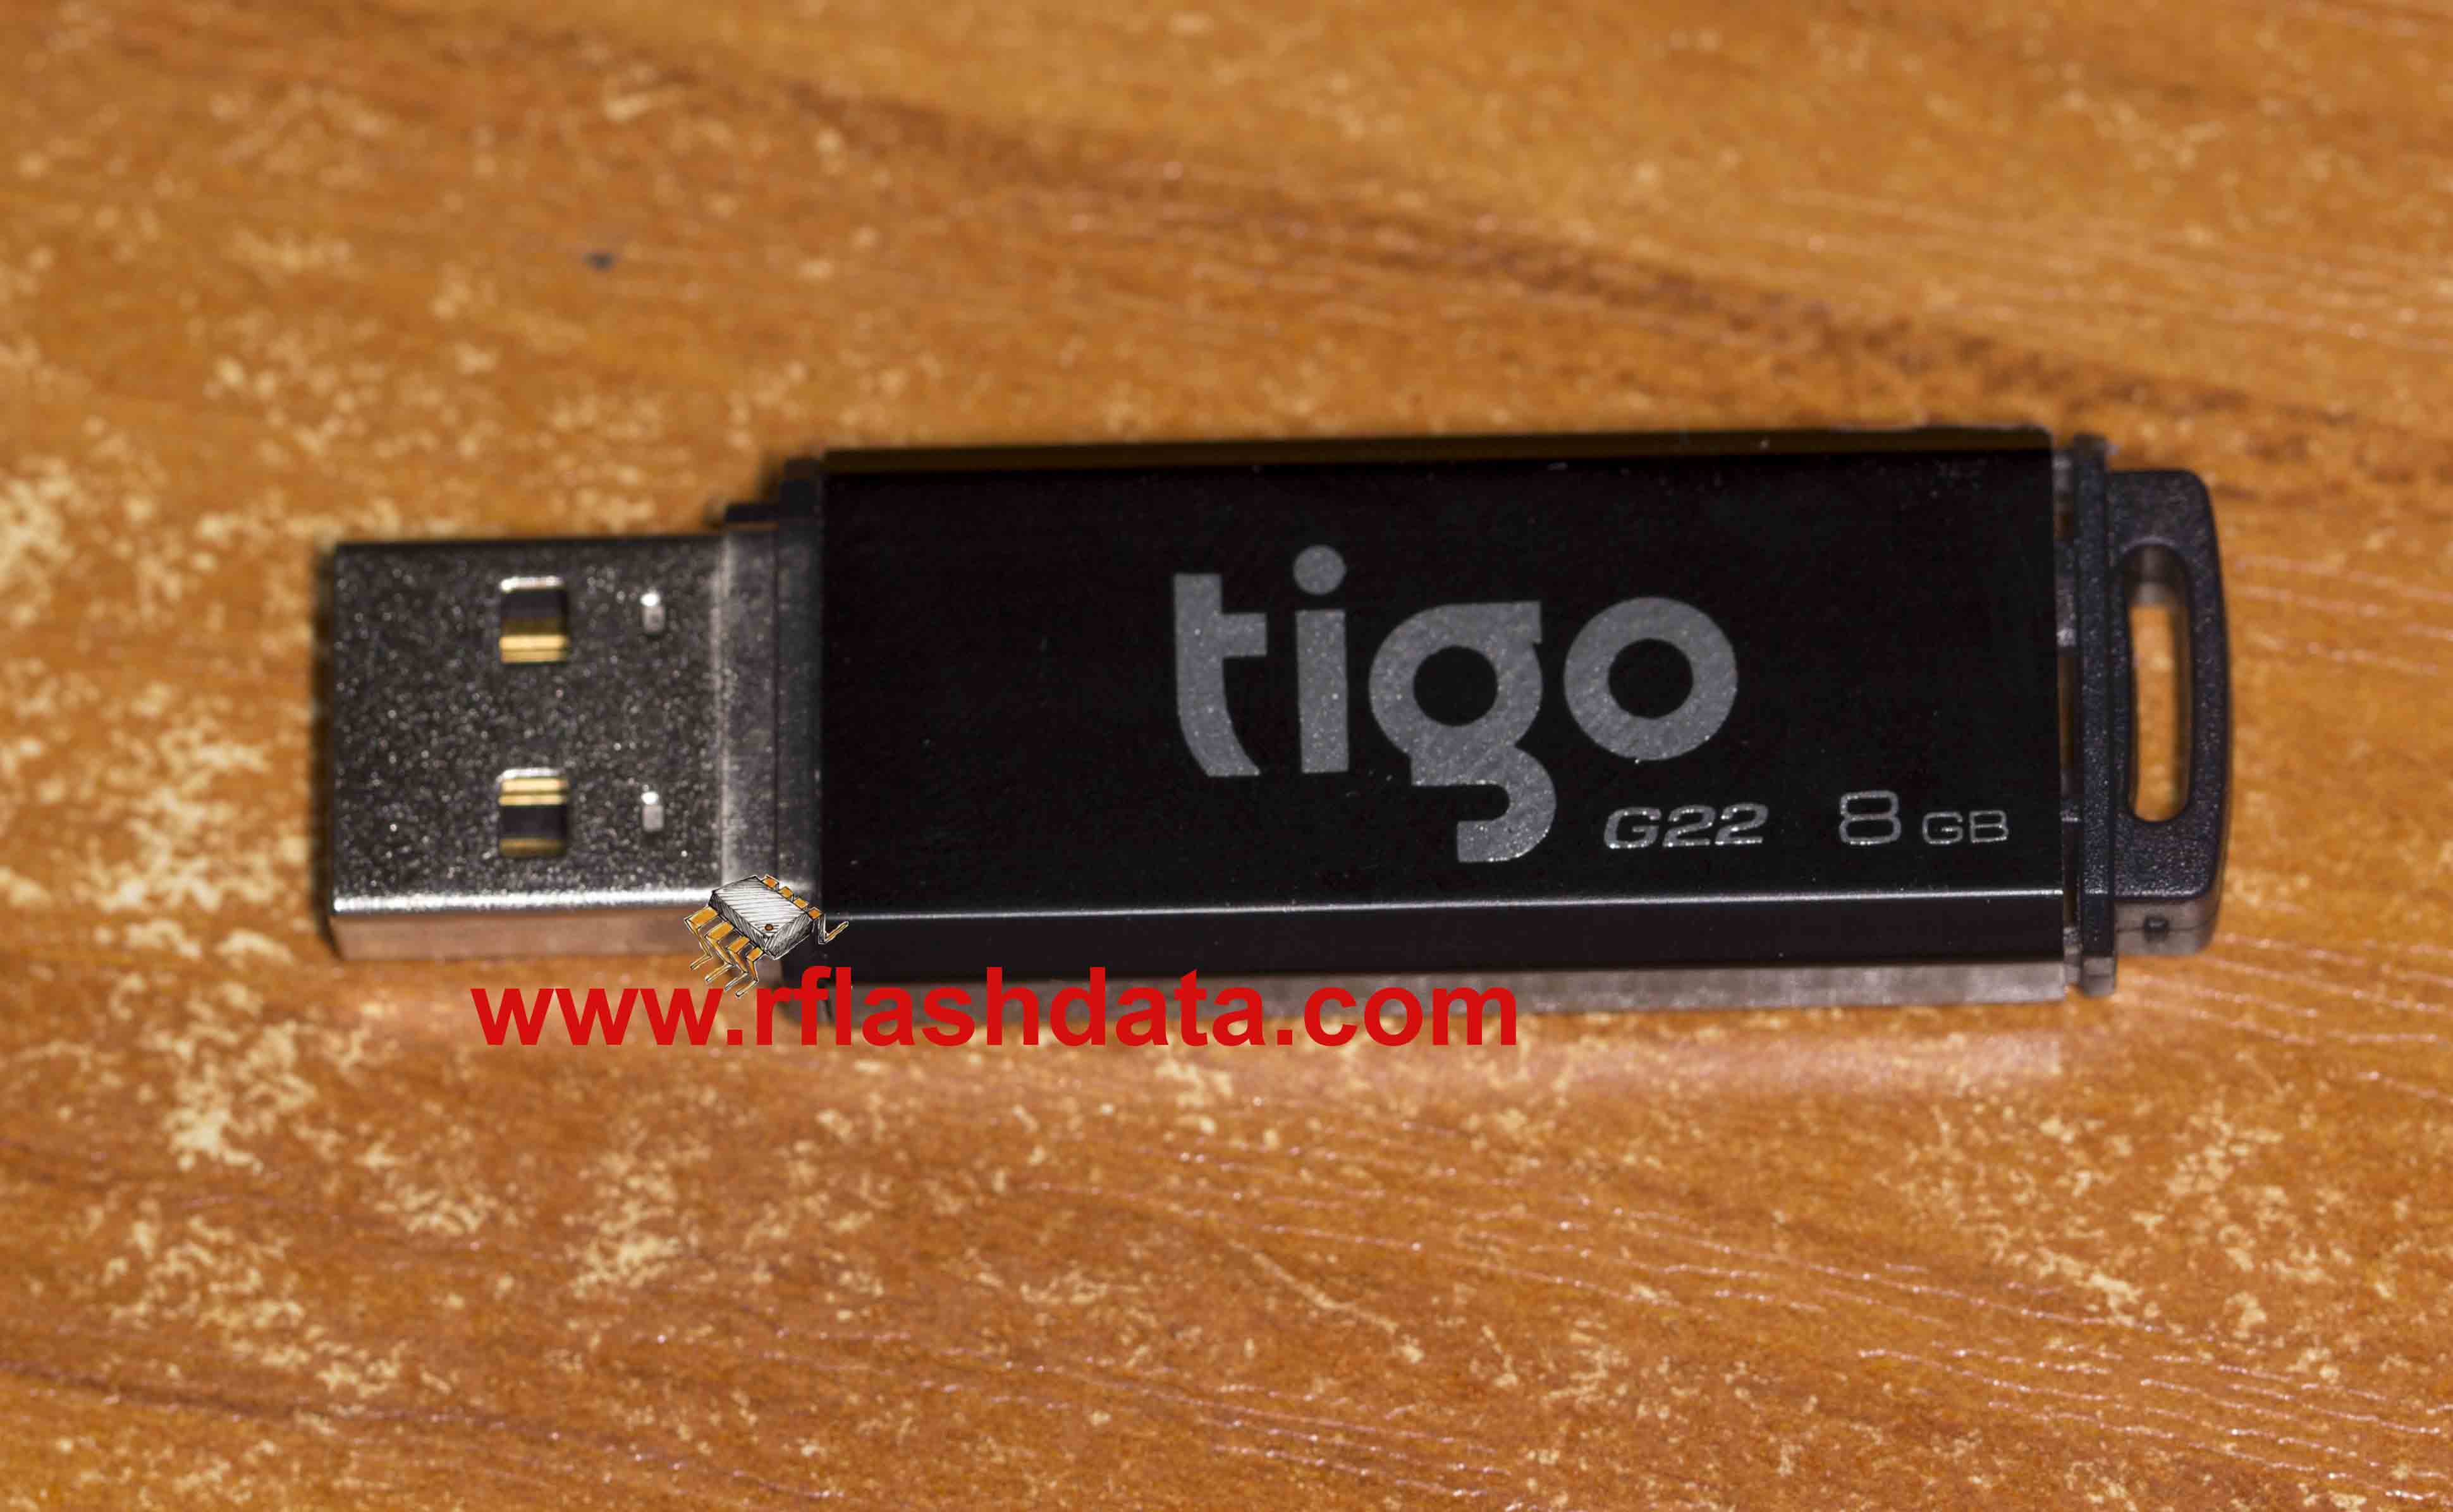 Tigo USB Flash drive